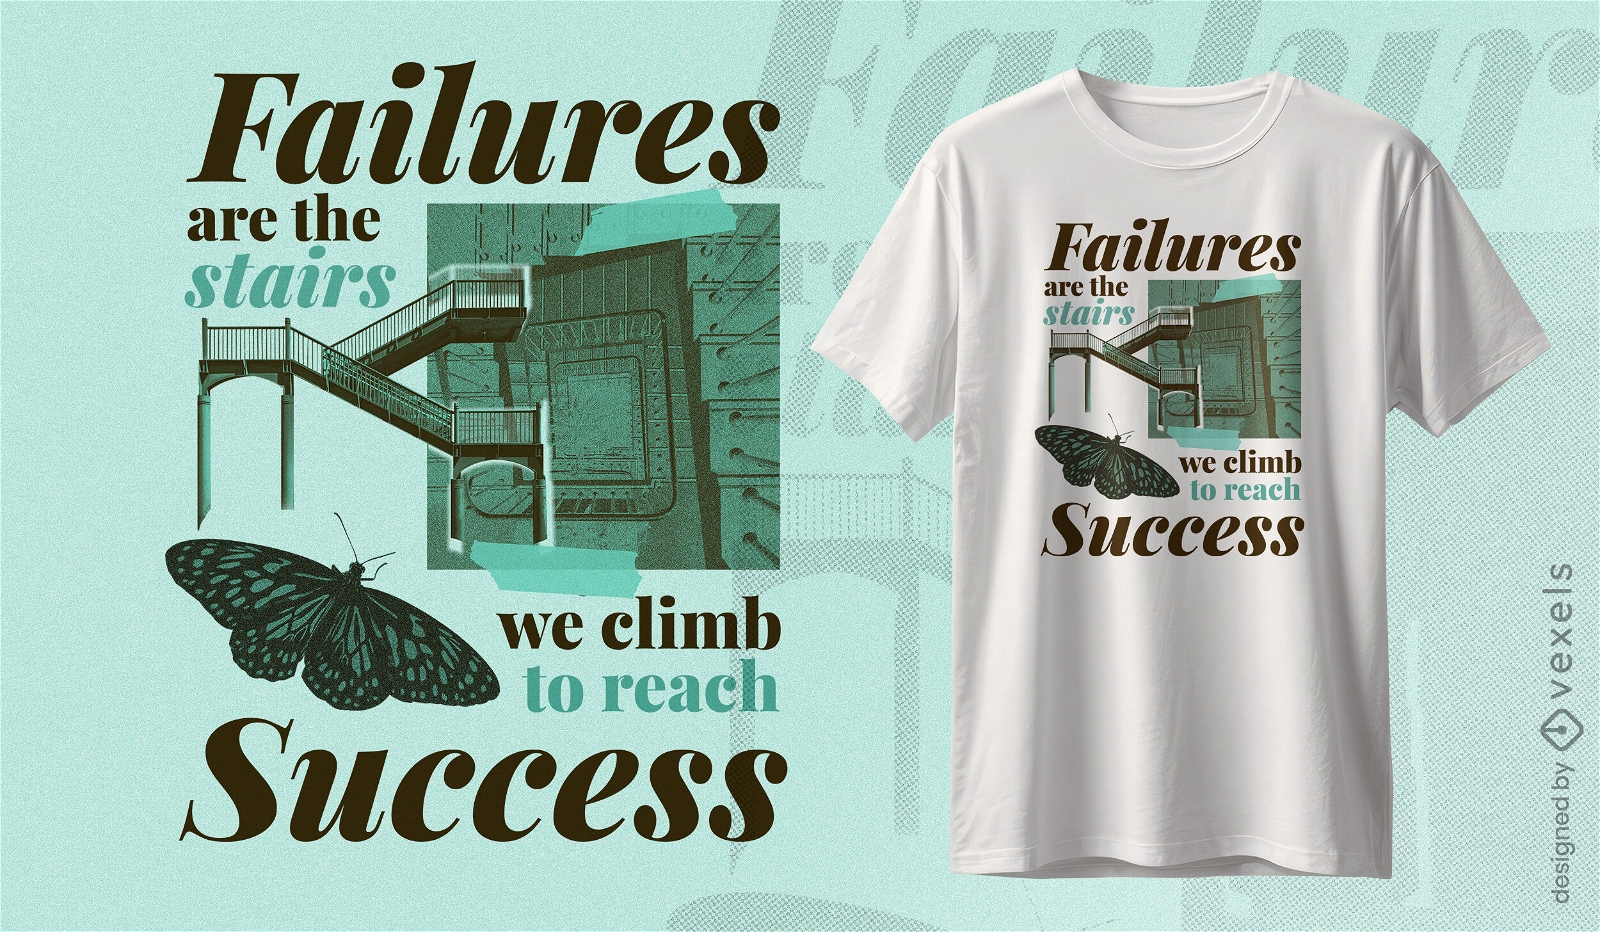 Failures steps to success t-shirt design